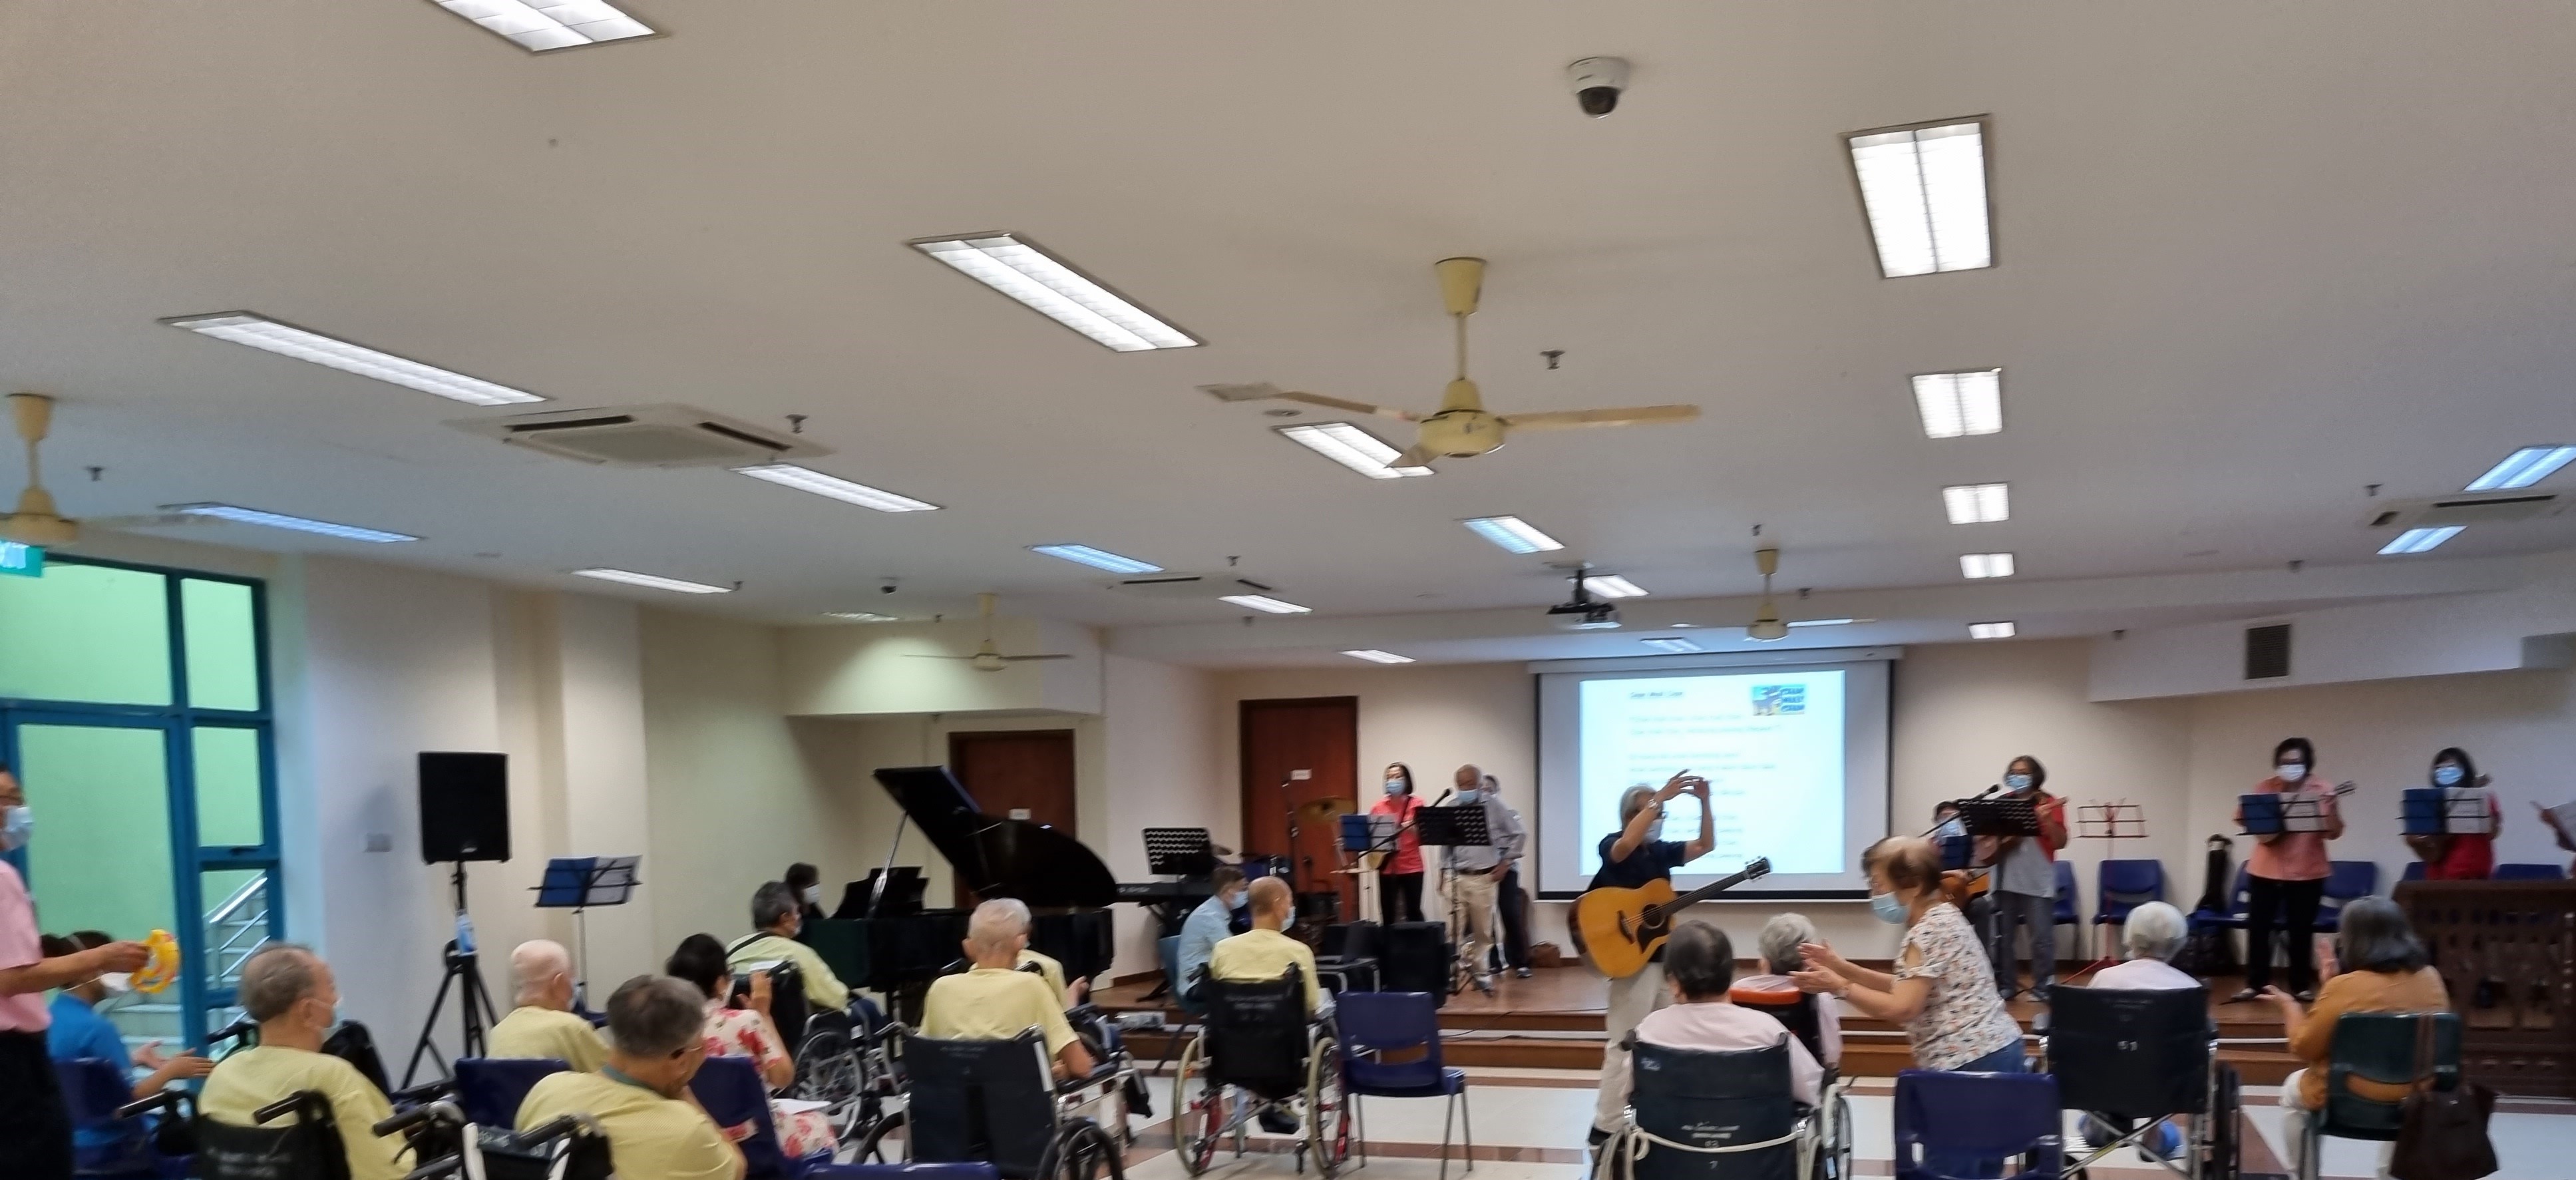 NUS Sing Along Alumni volunteering at All Saints Home (Hougang)